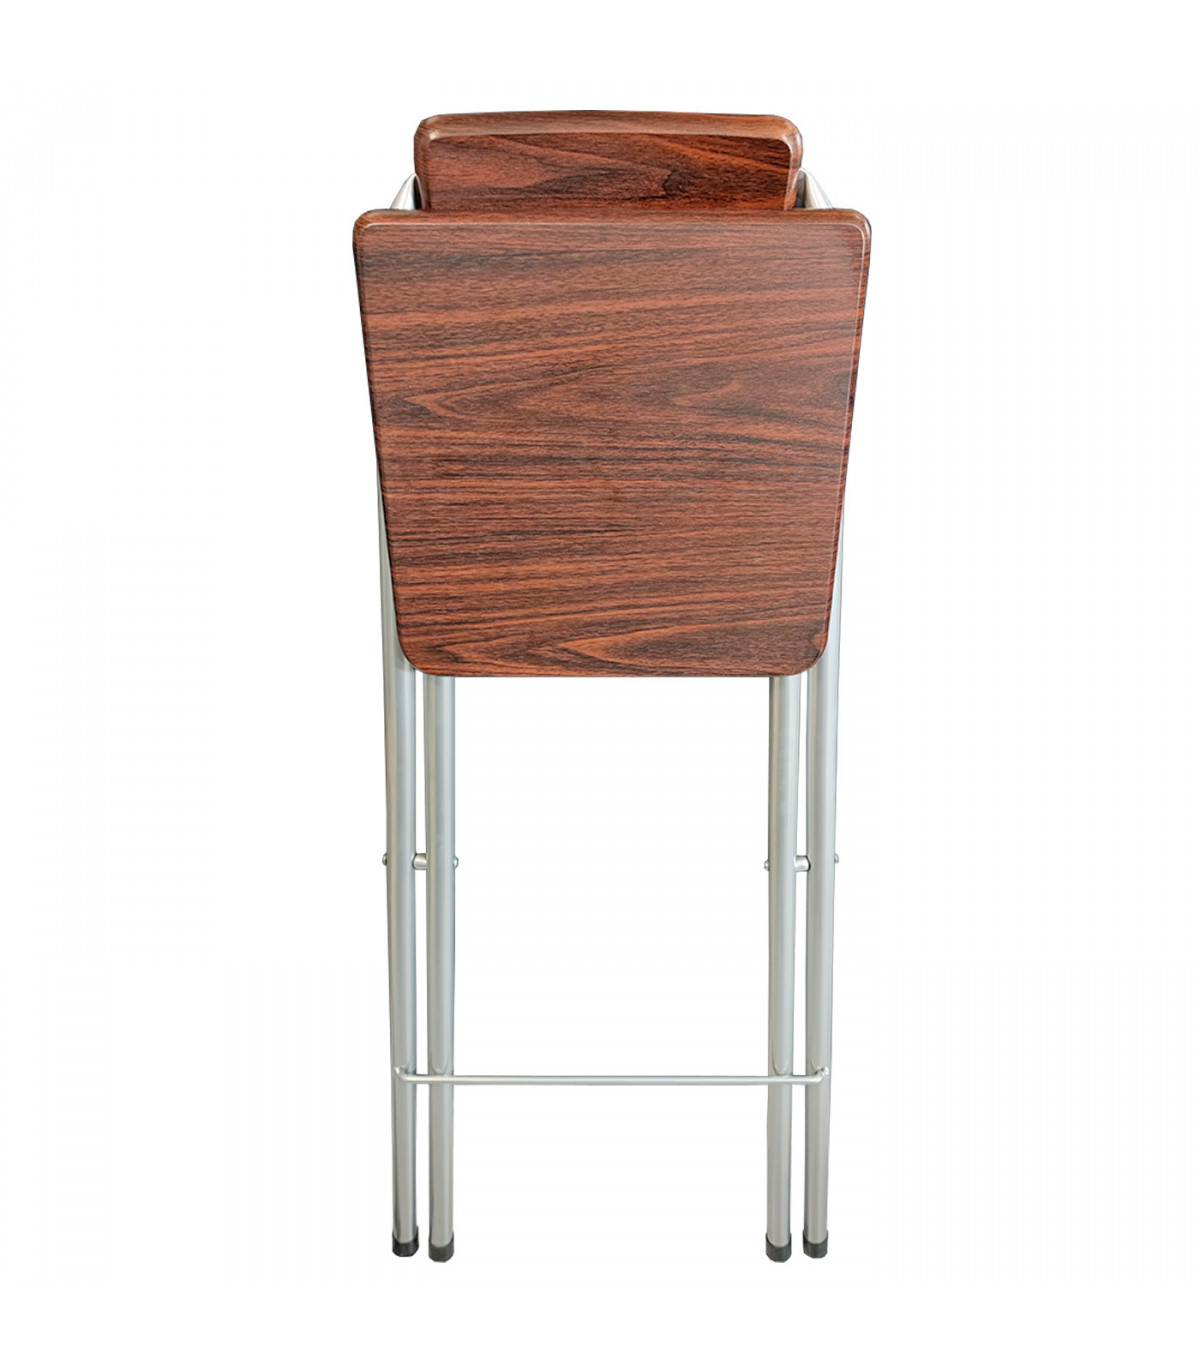 Taburete metálico plegable con asiento de madera, respaldo tubular,  reposapiés, banqueta, silla, interior, cocina, hogar, color